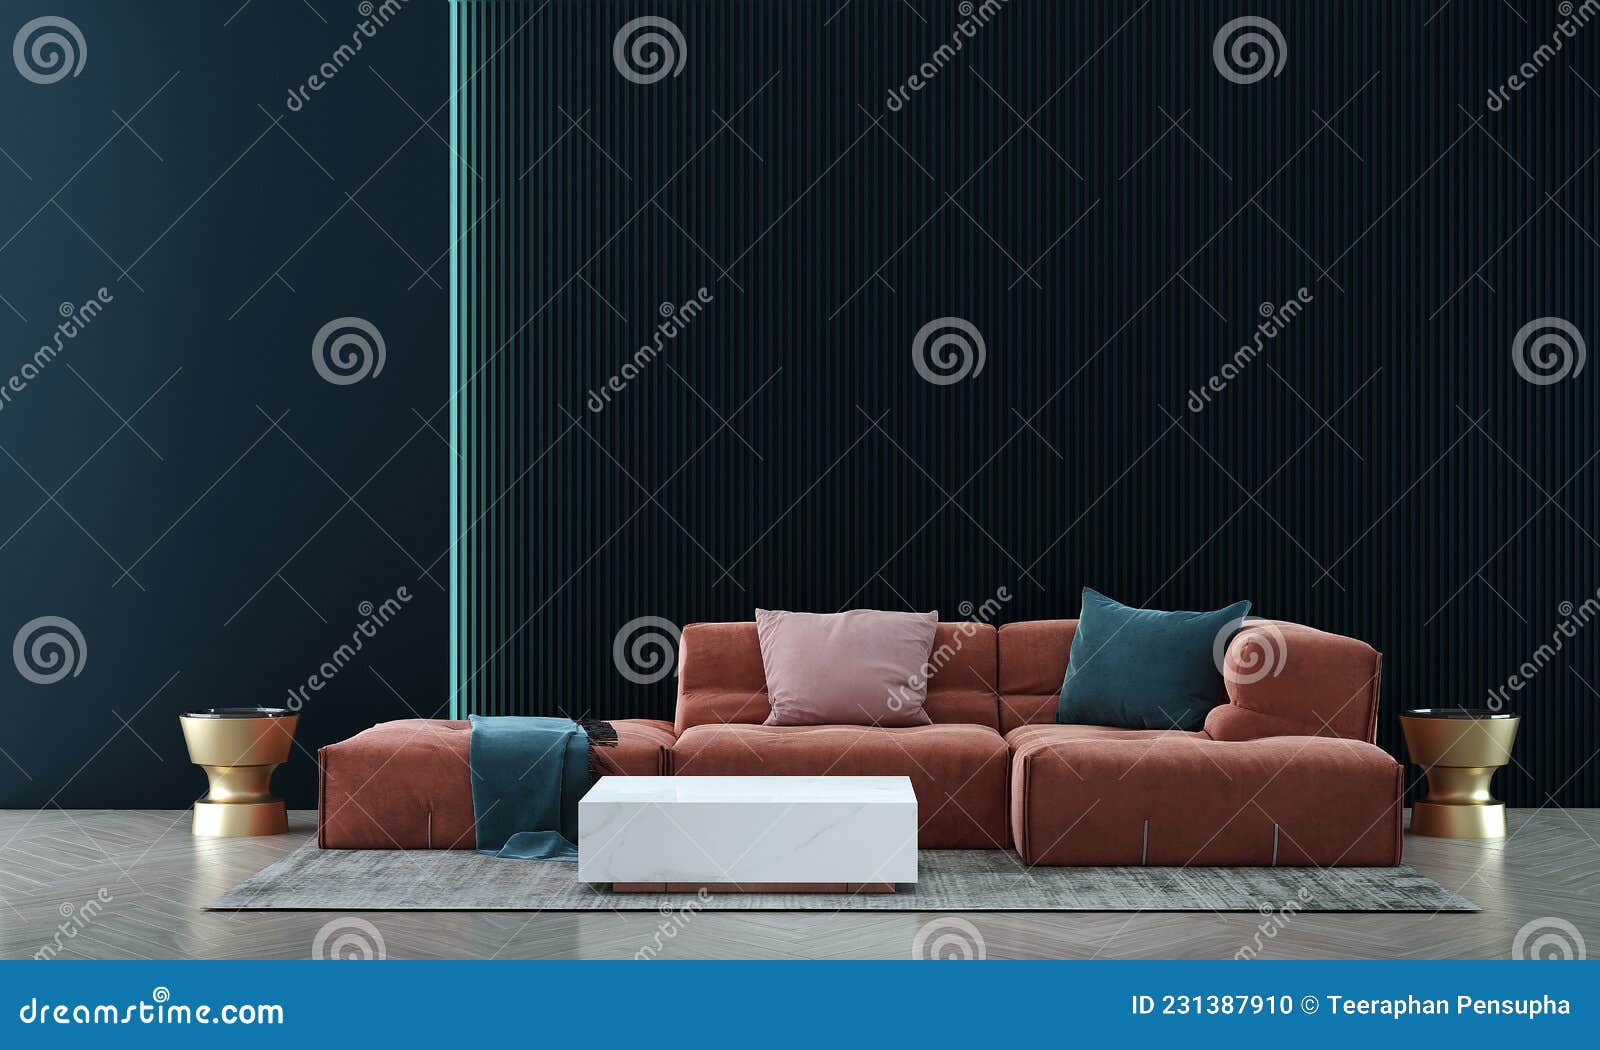 HD luxury home interior wallpapers  Peakpx